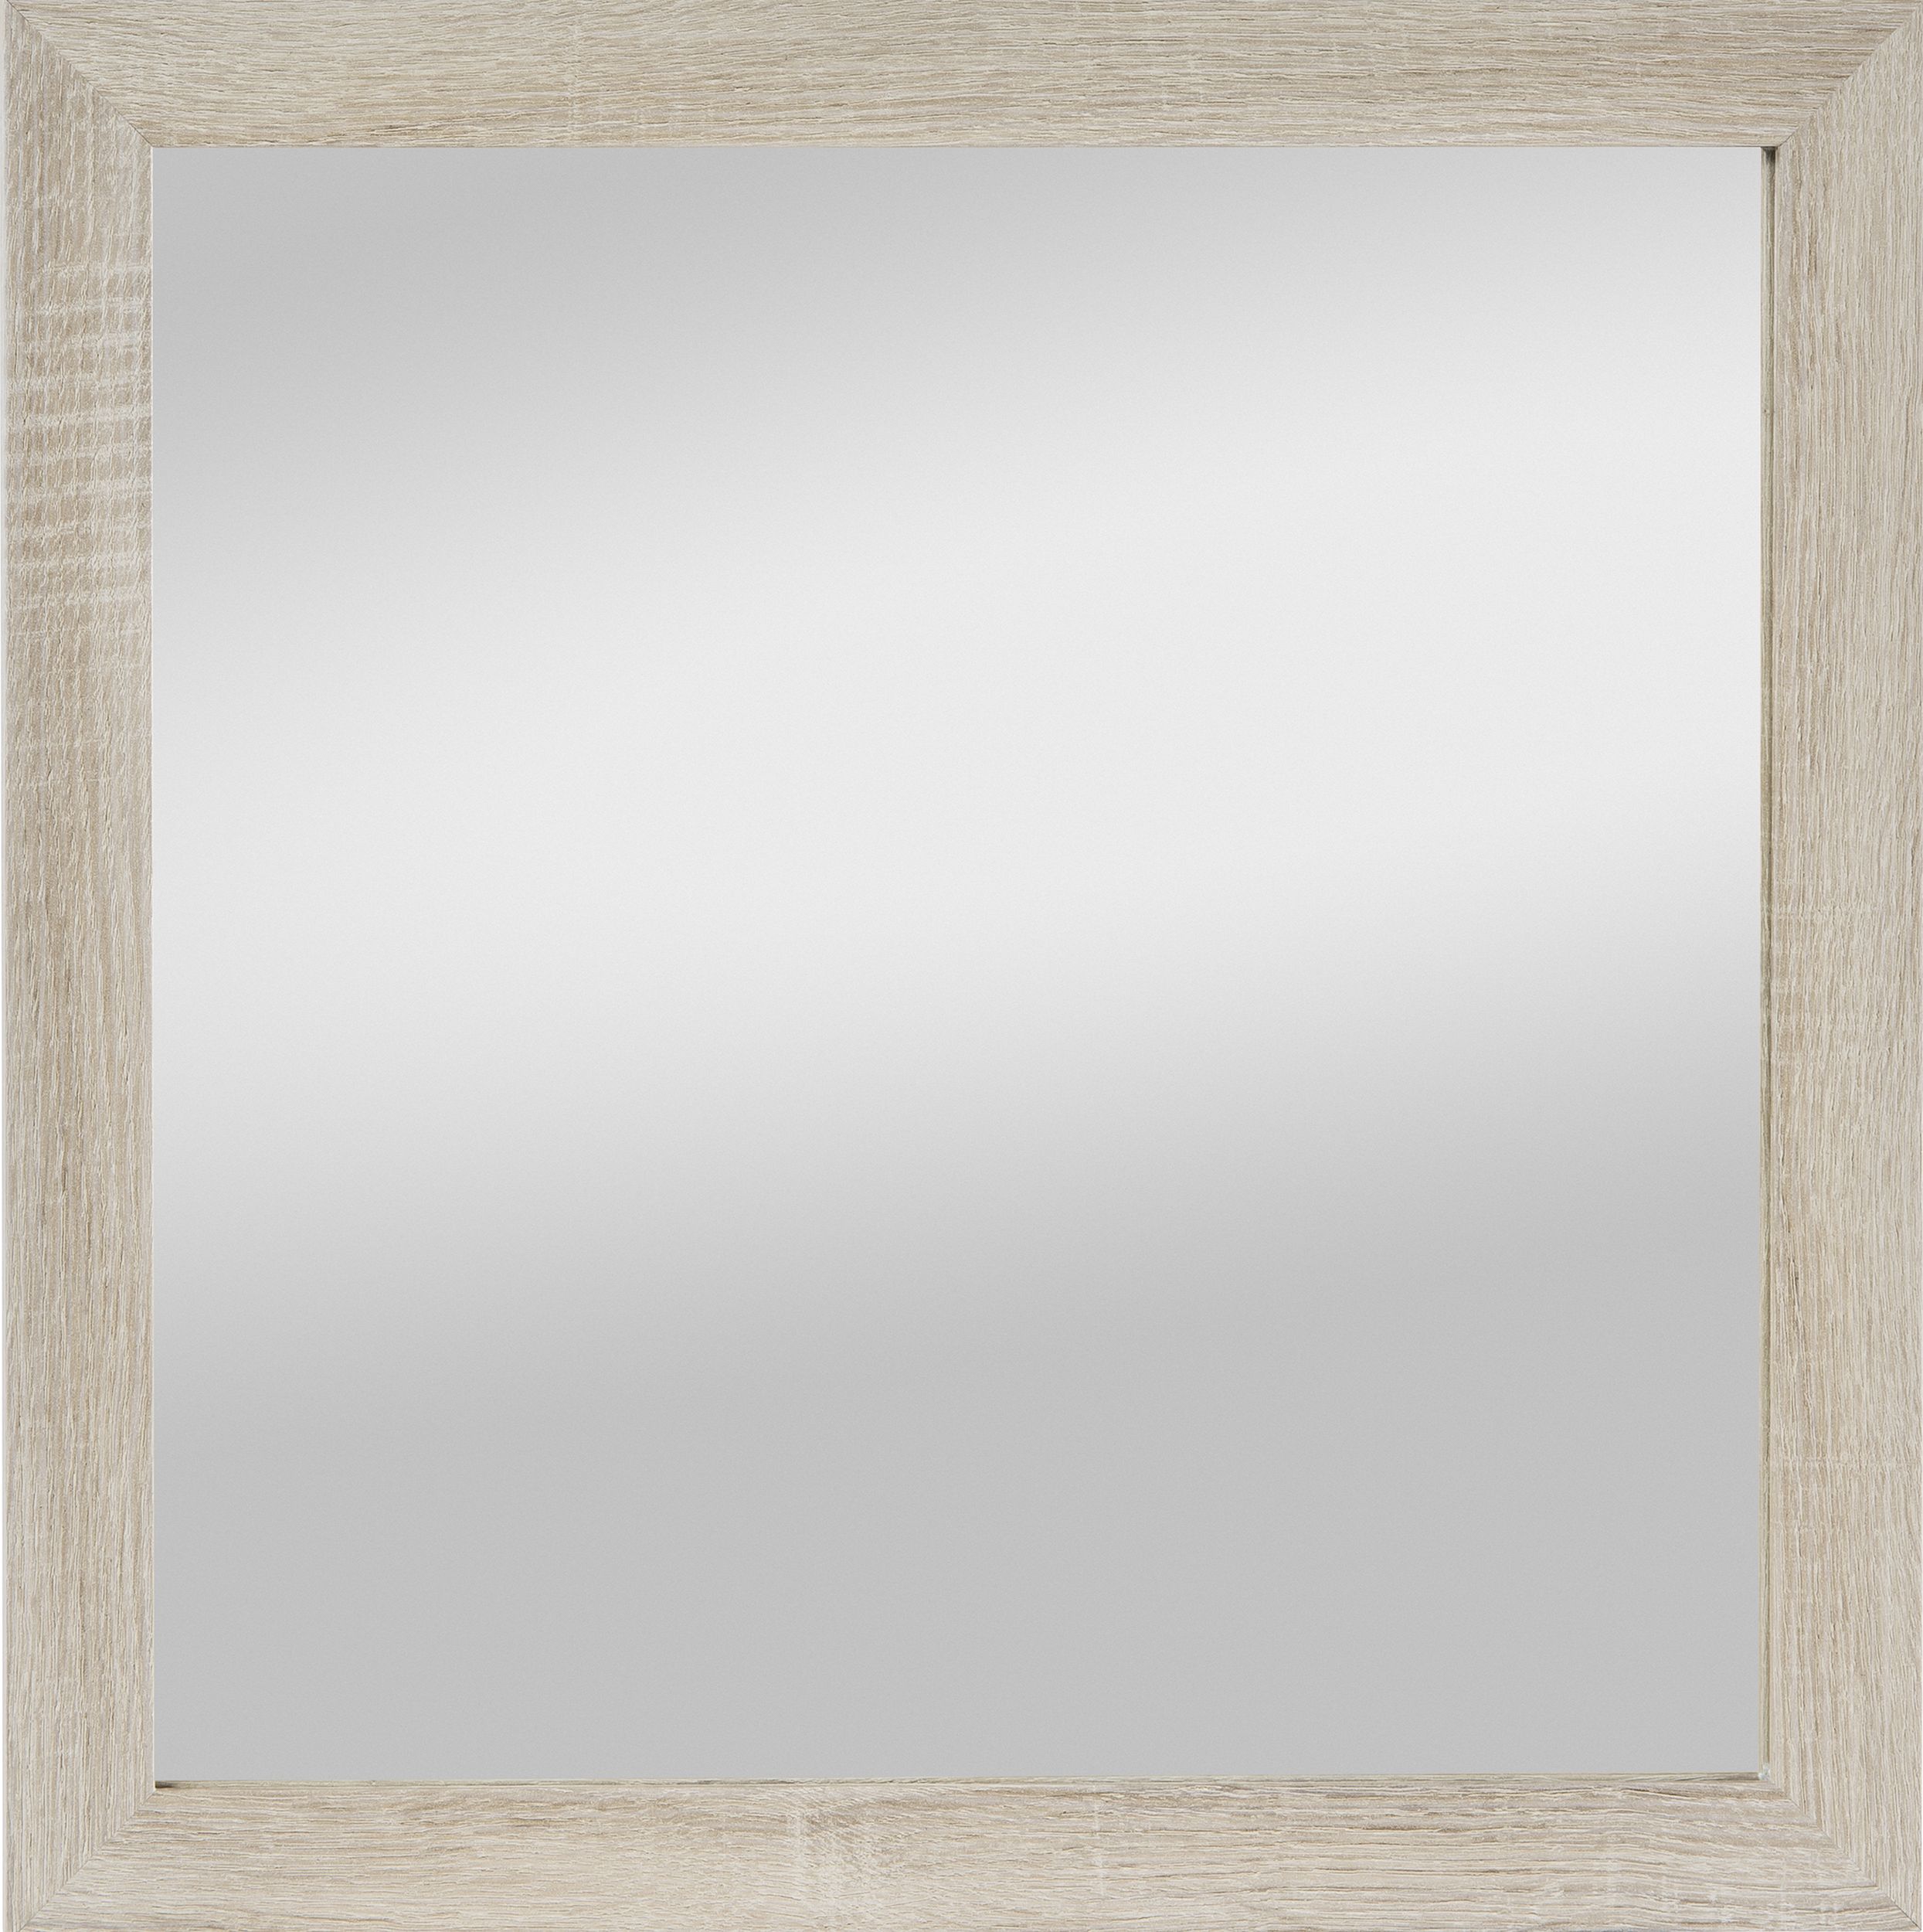 Rahmenspiegel 45x45cm   KATHI